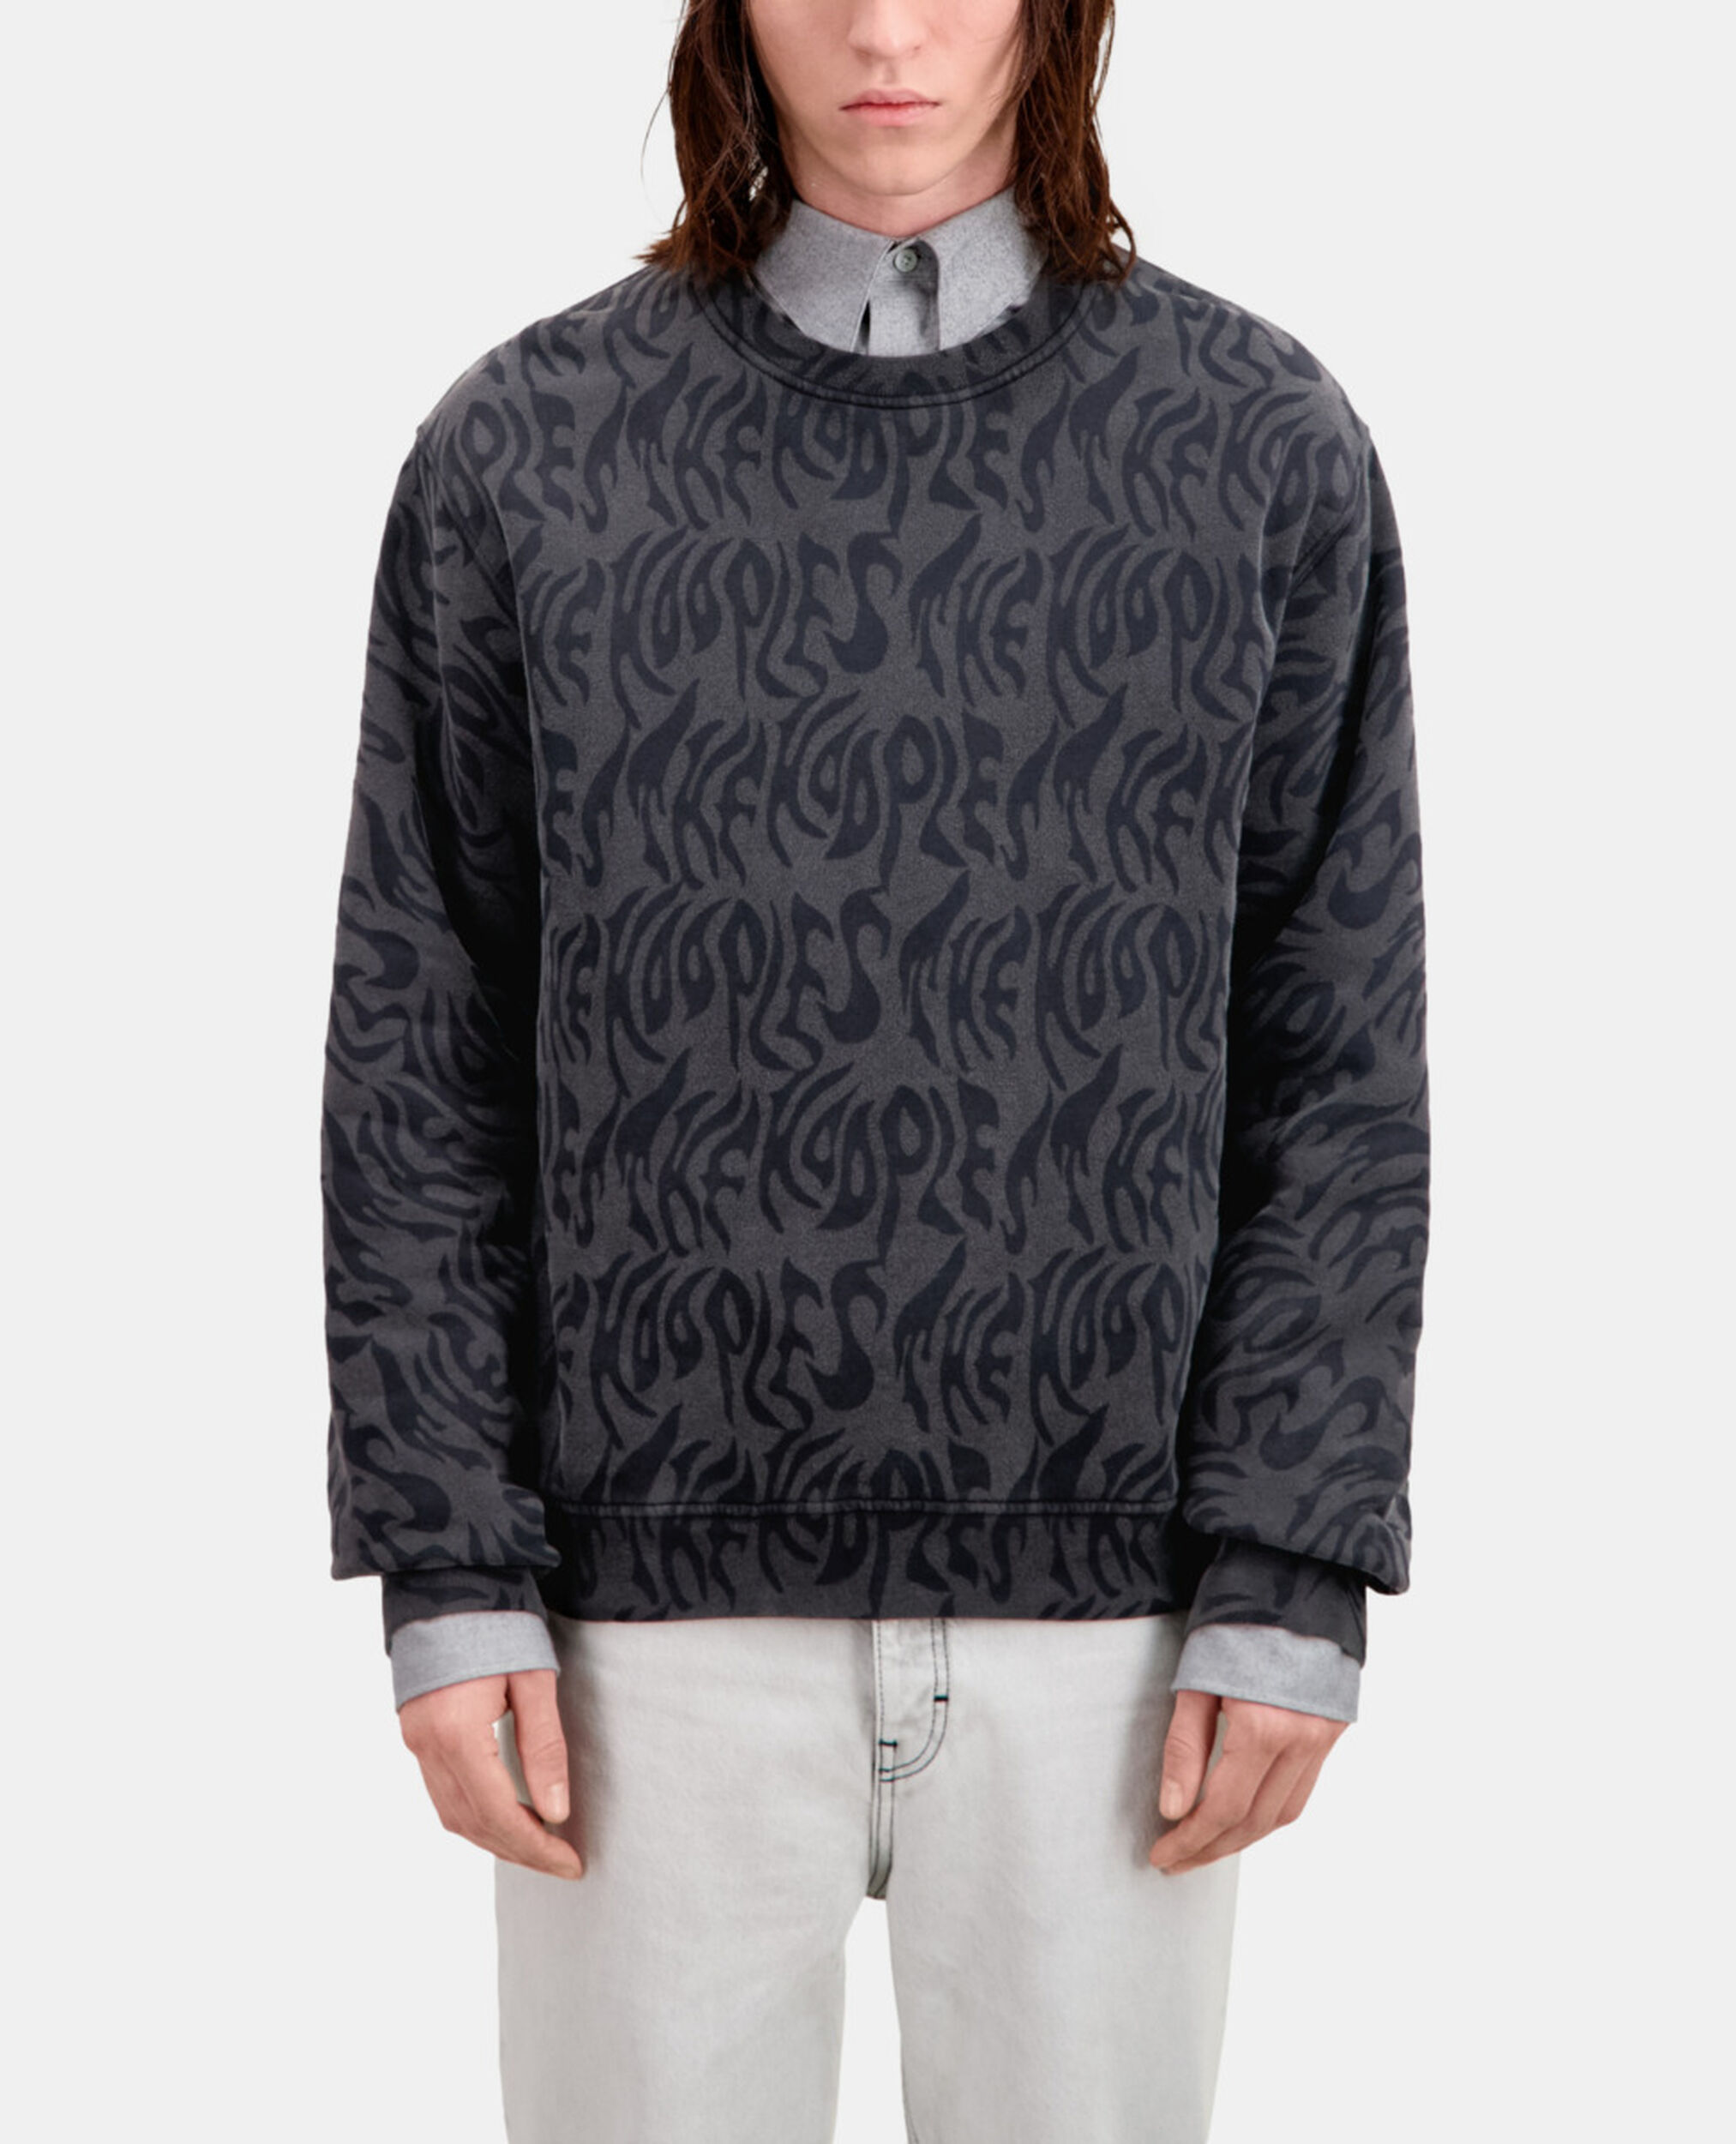 Herren Sweatshirt mit Print, BLACK WASHED, hi-res image number null